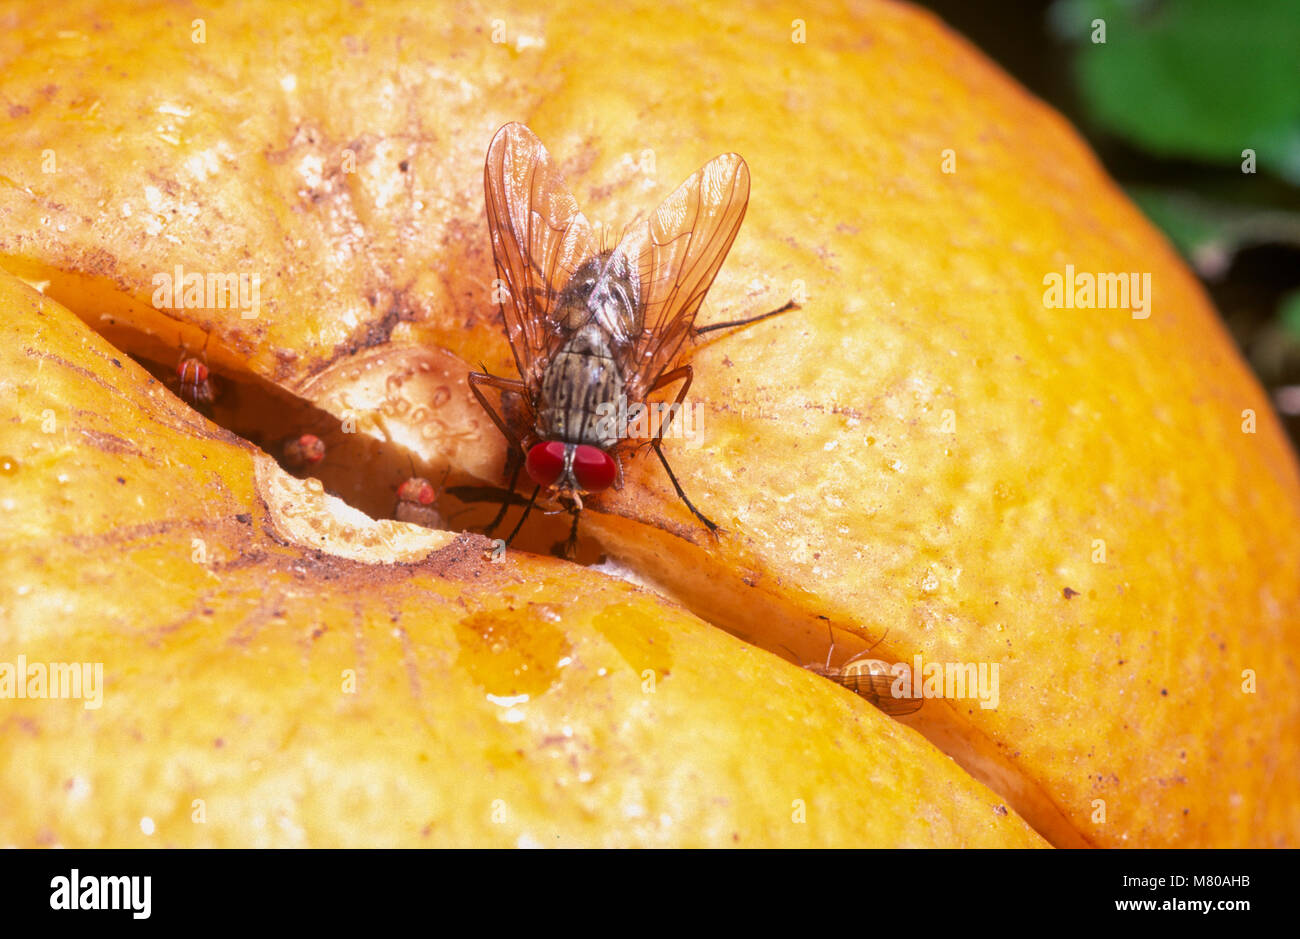 Red-eyed muscid fly (Muscidae) e aceto vola (Drosophilidae), alimentando in Orange Foto Stock